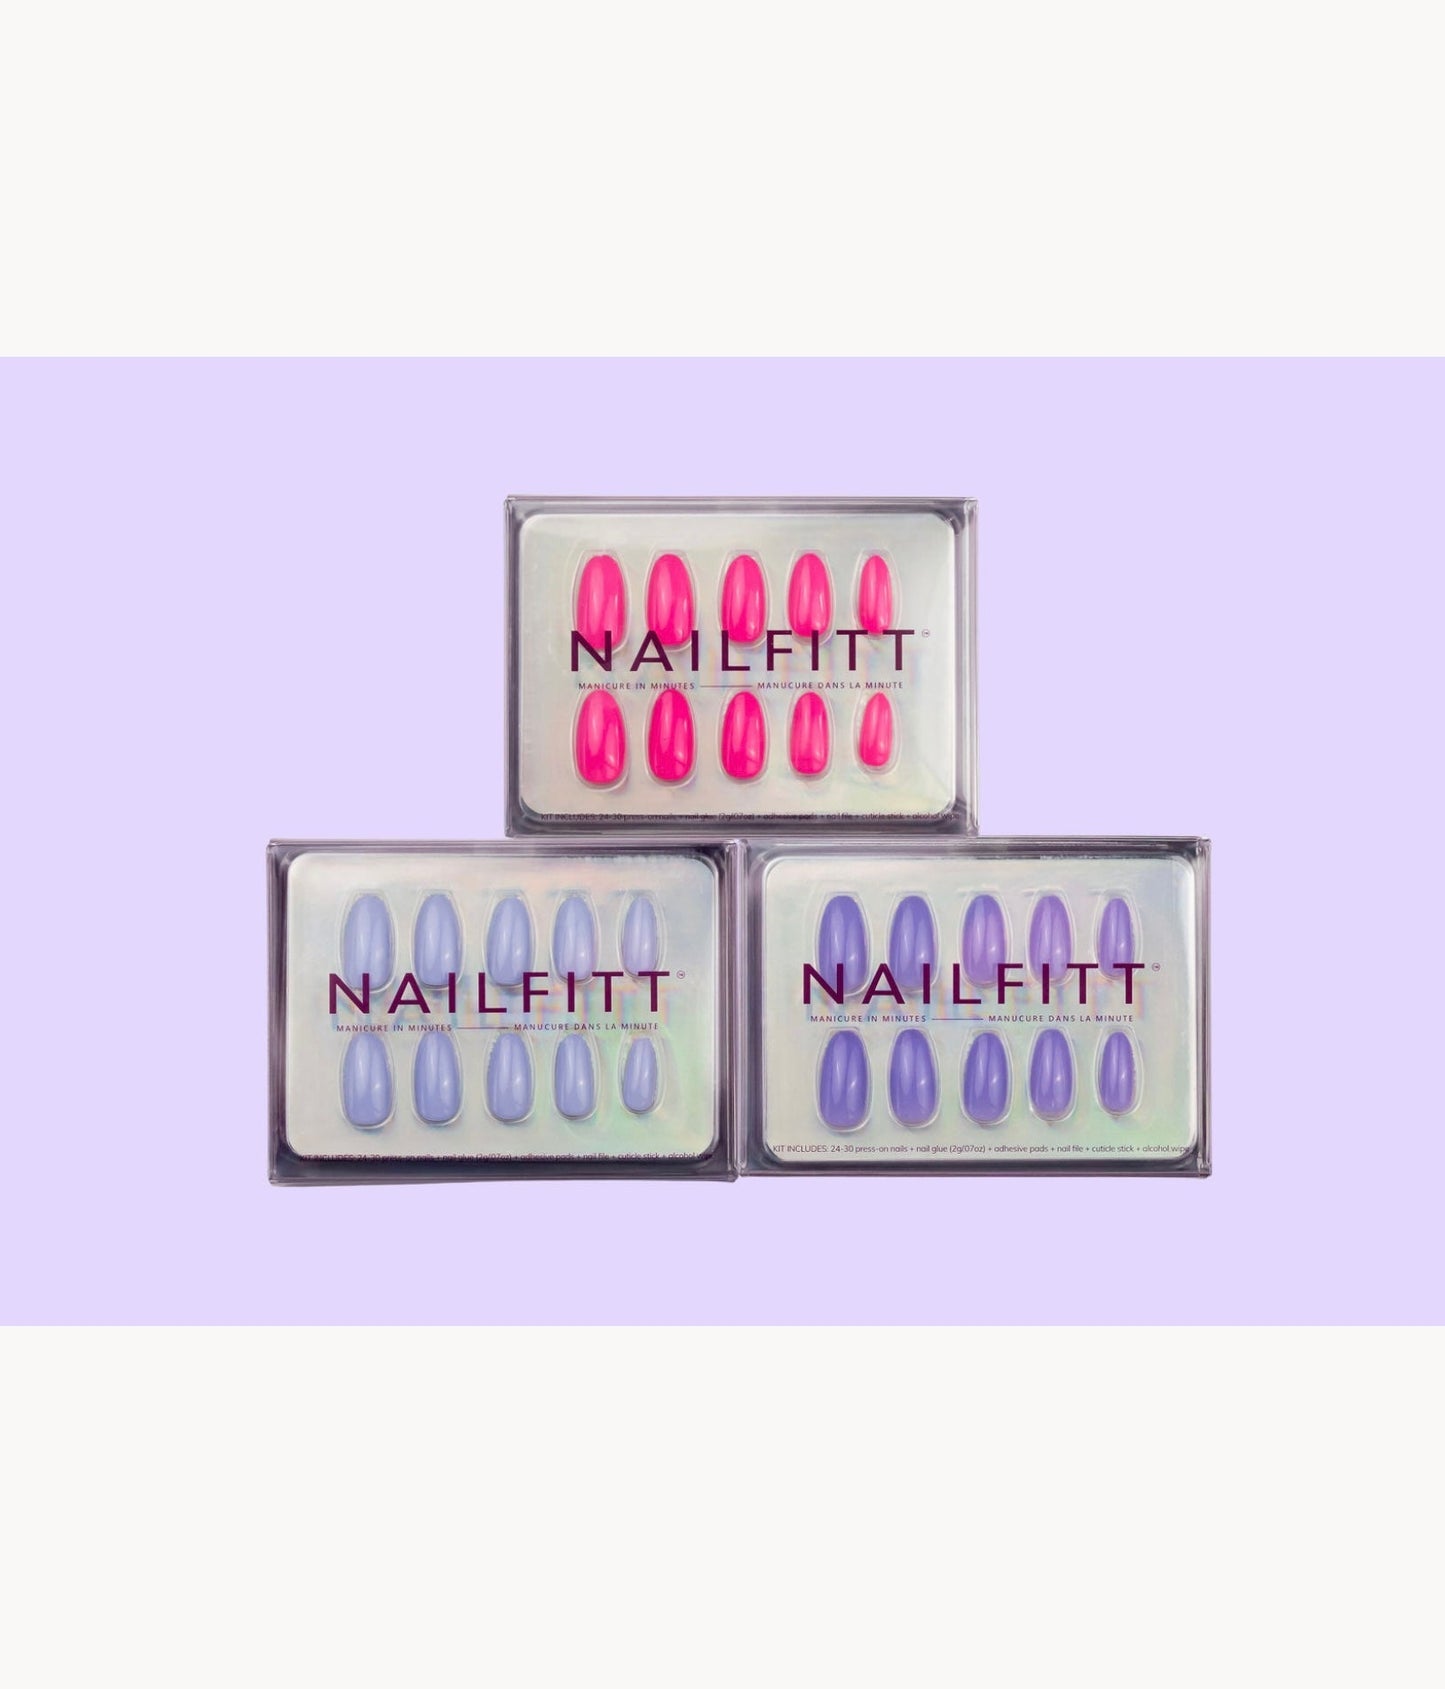 Nailfitt Mini Kit press-on nails